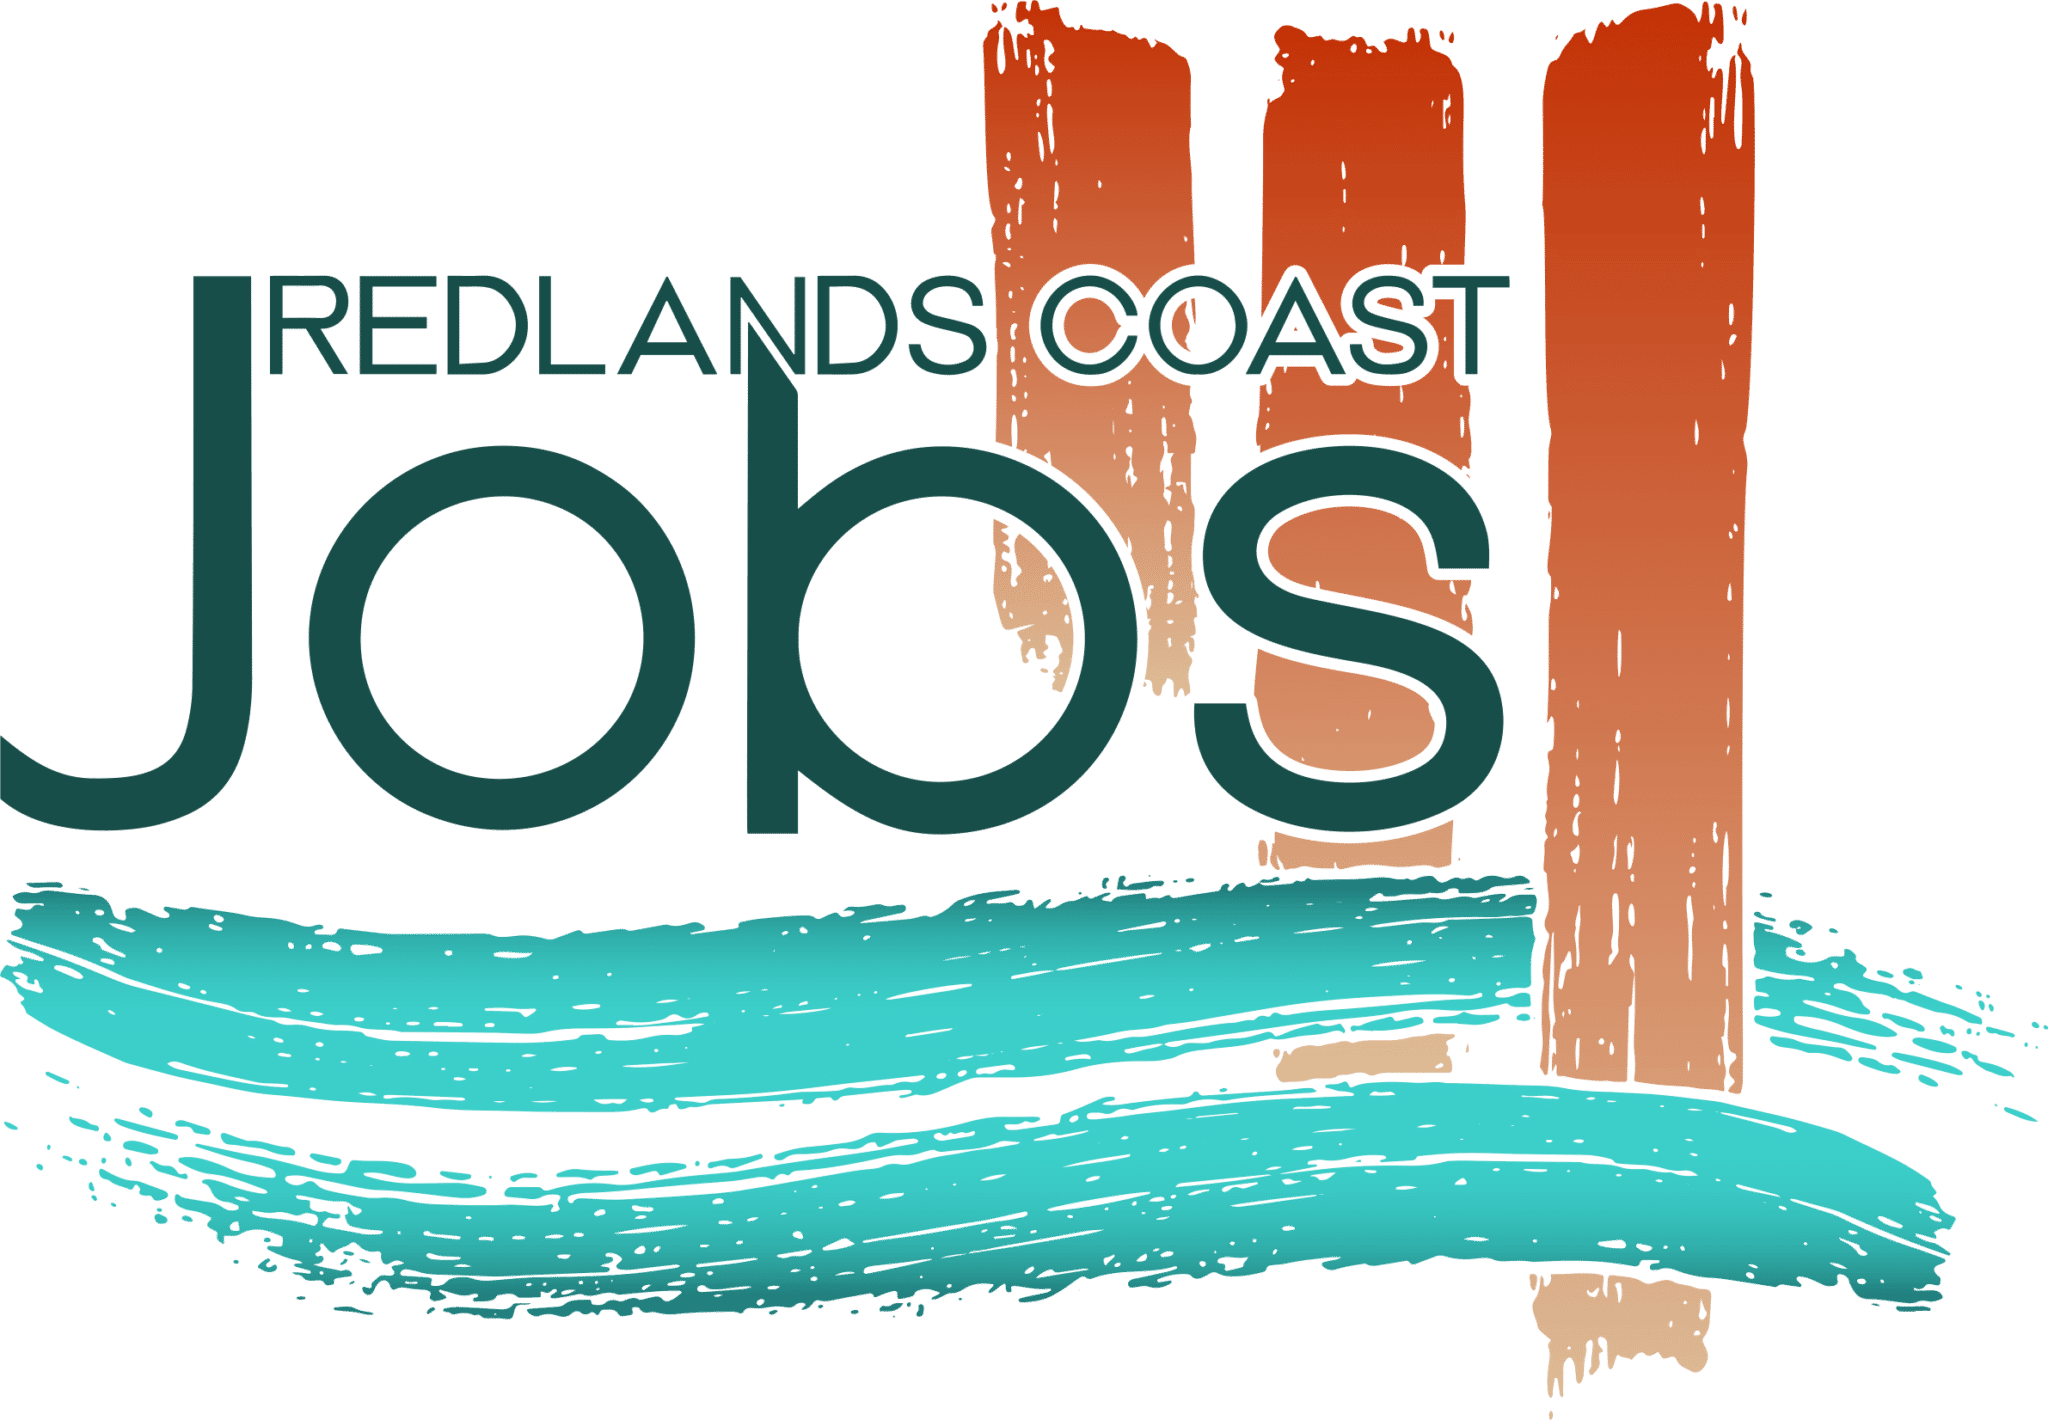 redlands coast jobs dark